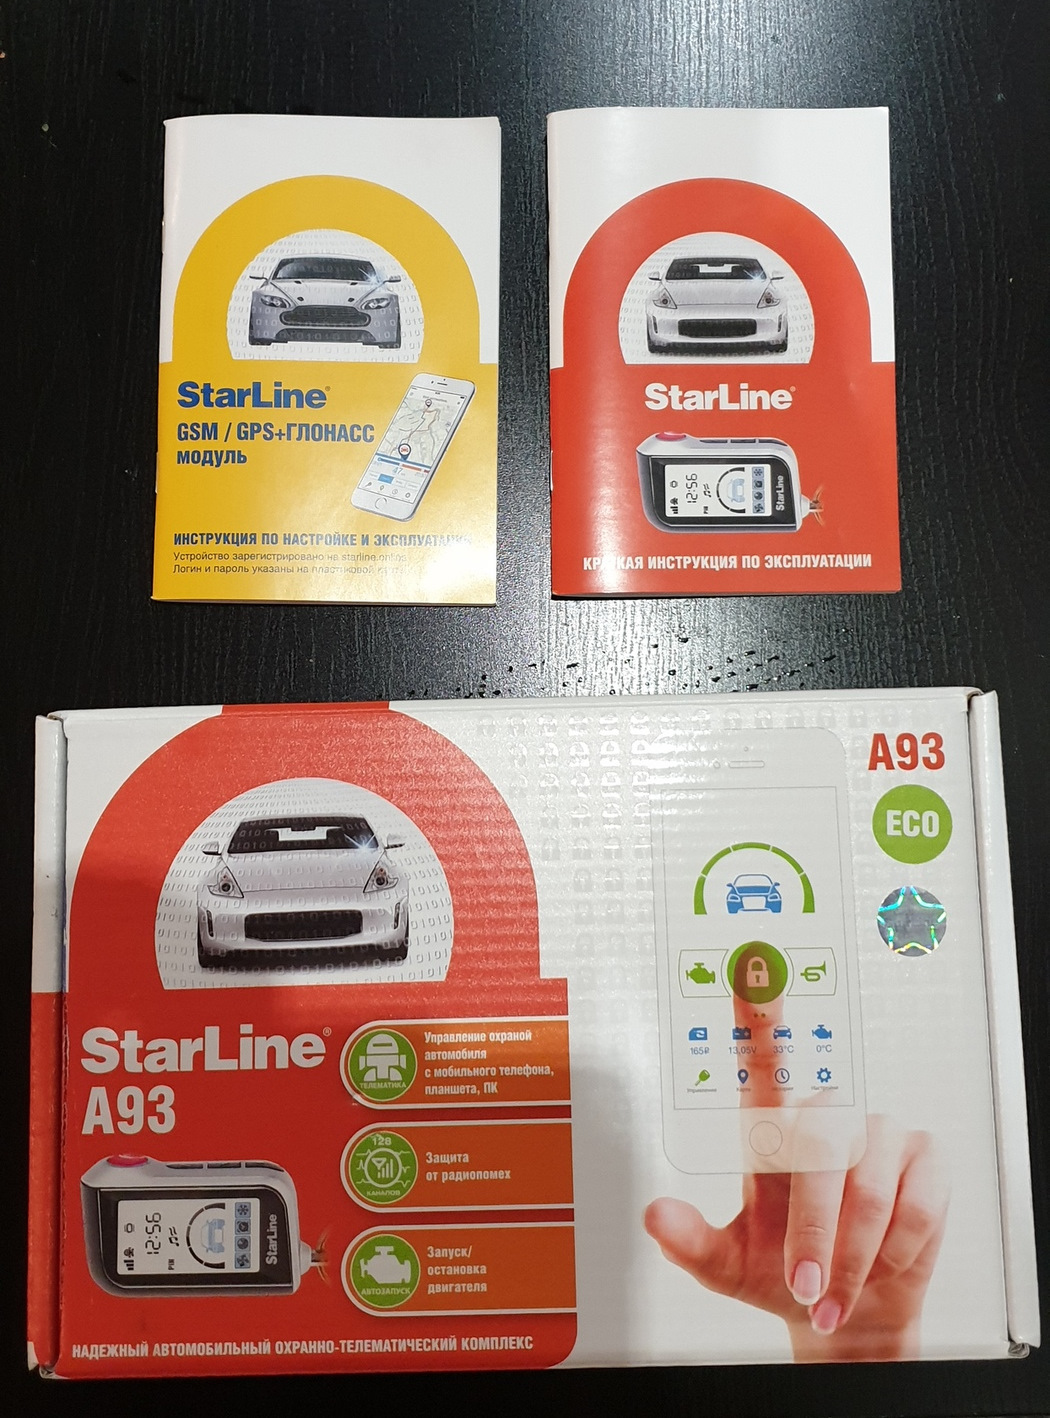 Starline gsm цена. GSM модуль для STARLINE приложение.